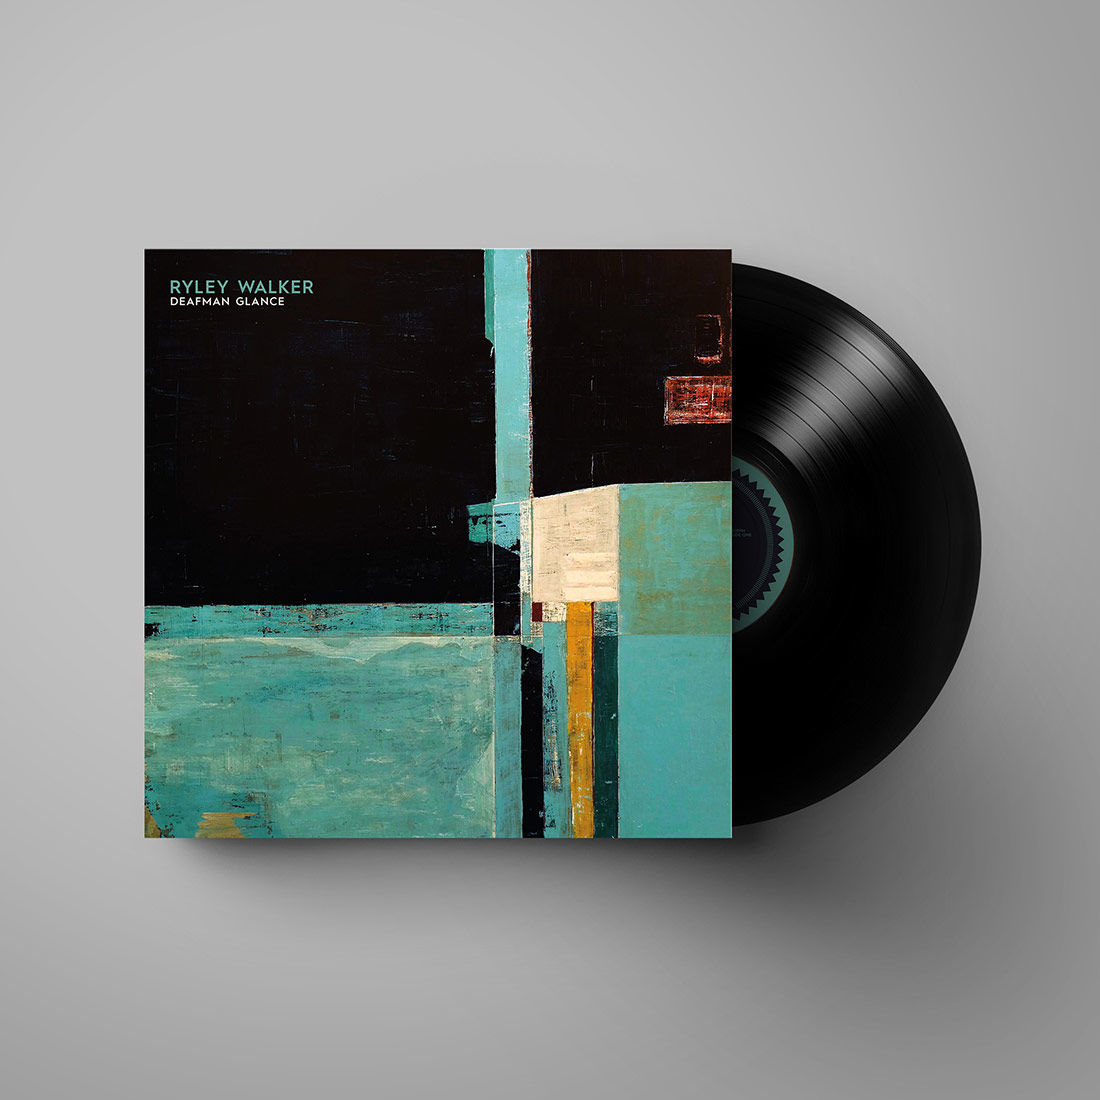 Deafman Glance: Vinyl LP